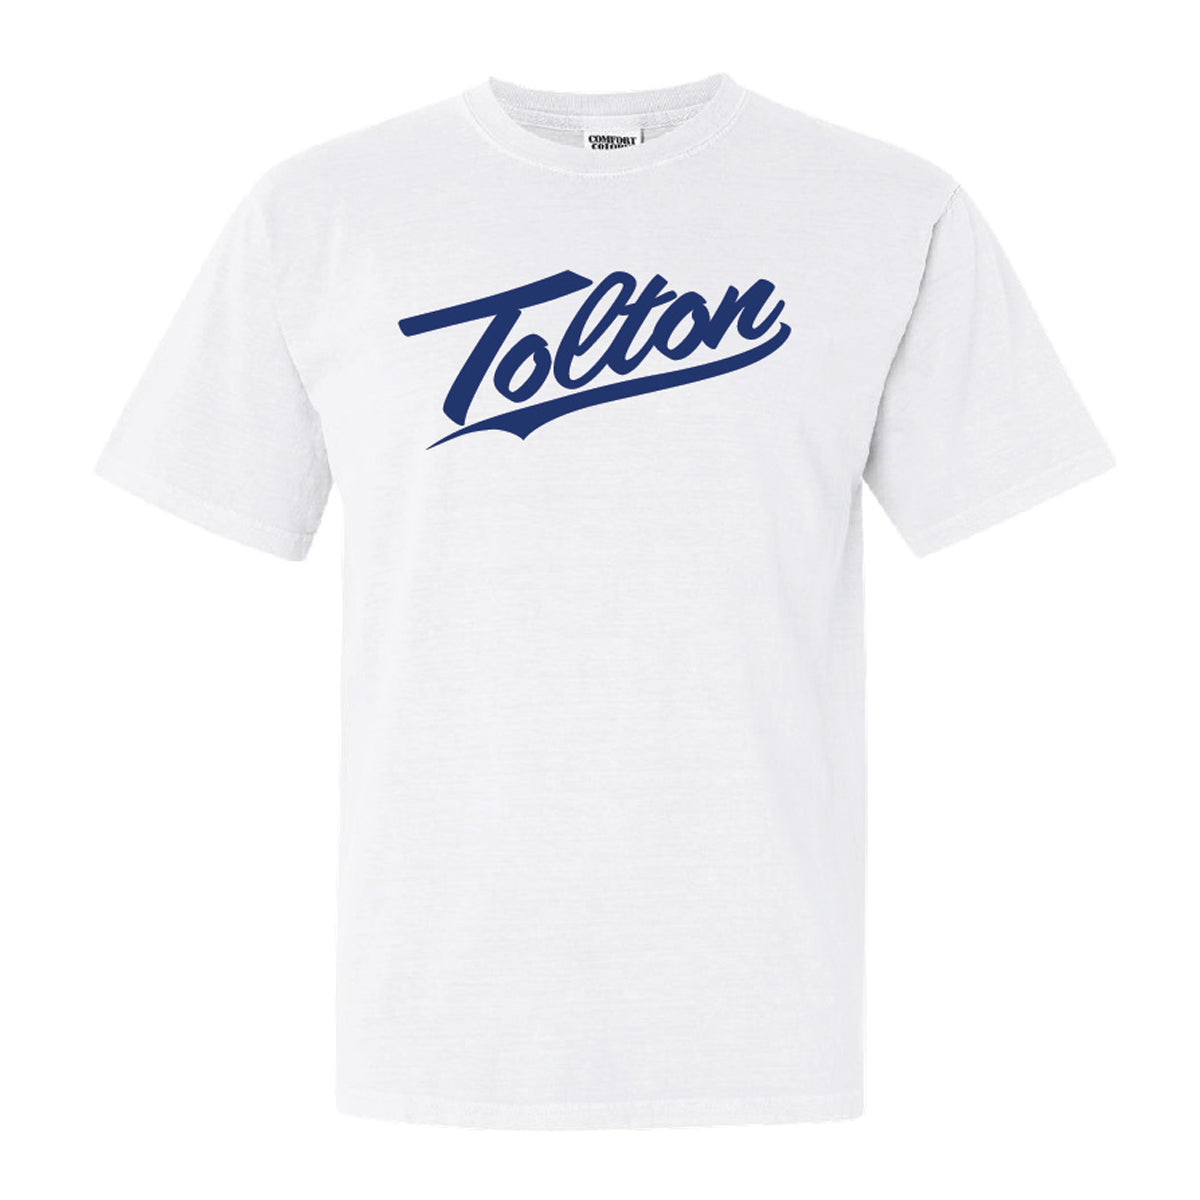 Tolton 3D Puff Screen Print T-Shirt